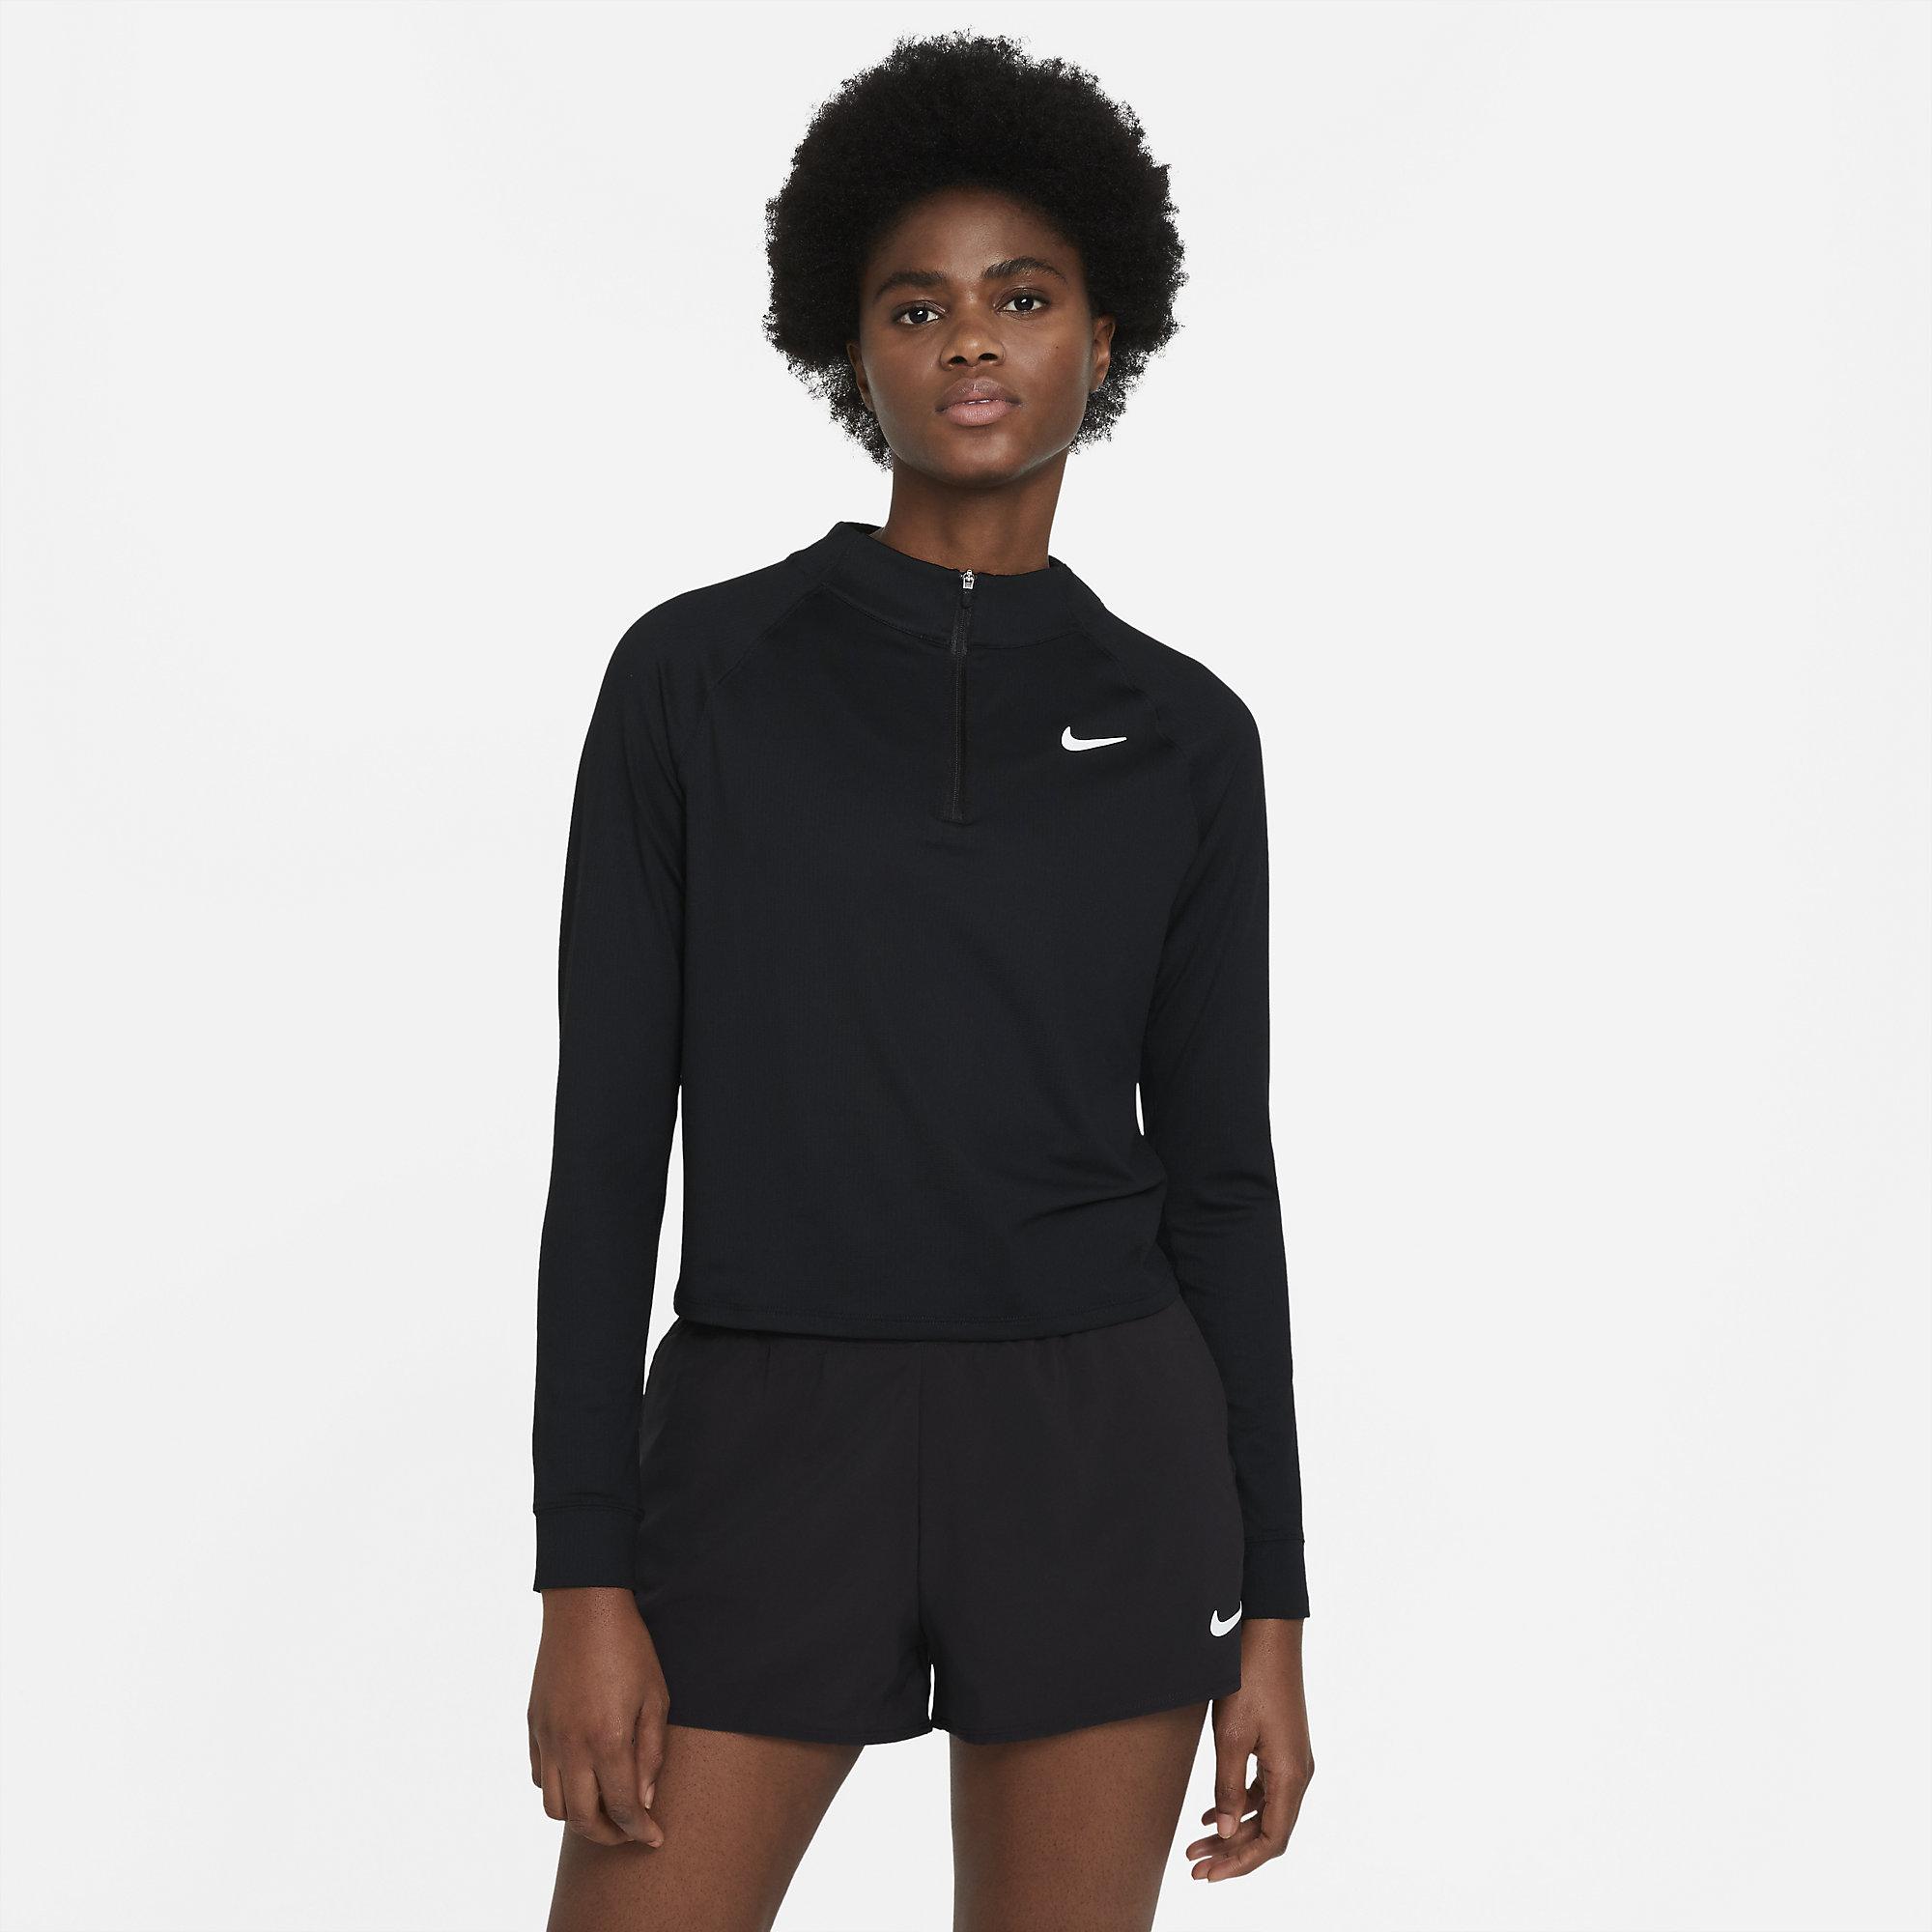 Nike Womens Victory Half Zip Tennis Top - Black - Tennisnuts.com